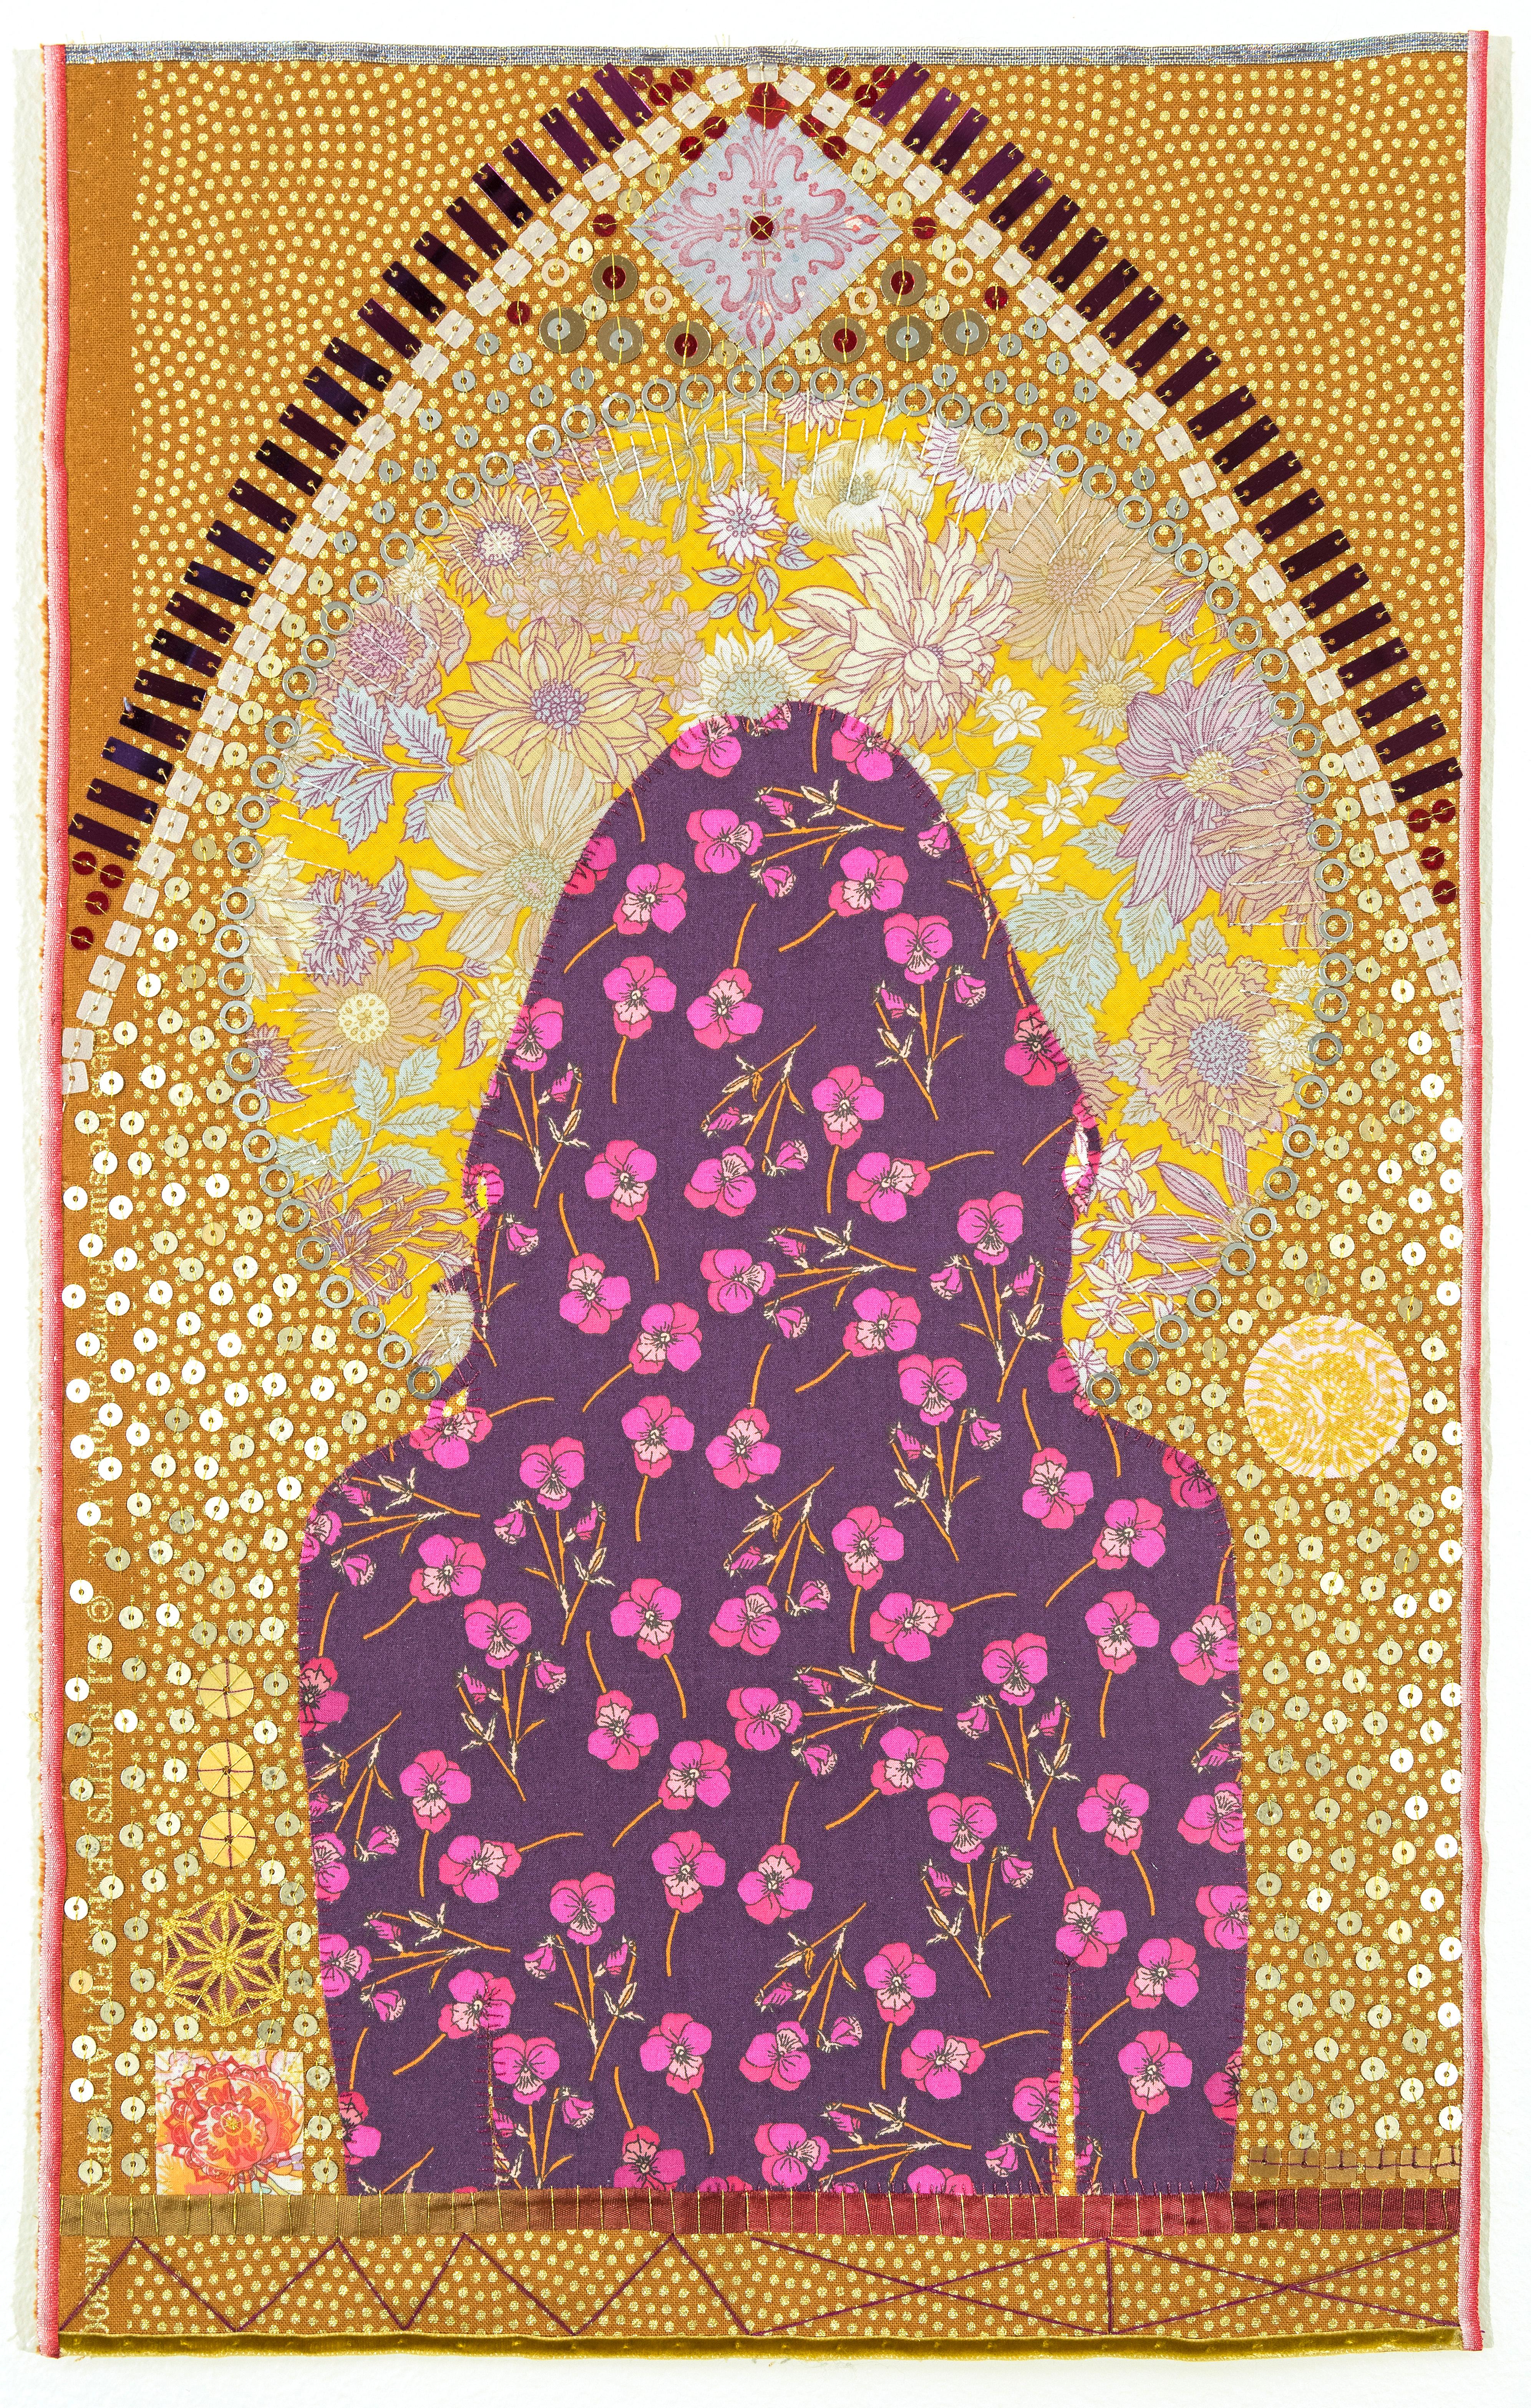 Jan Testori - Markman Figurative Sculpture - Untitled MM8, silhouette, pattern, textile, icon, yellow, gold, pink